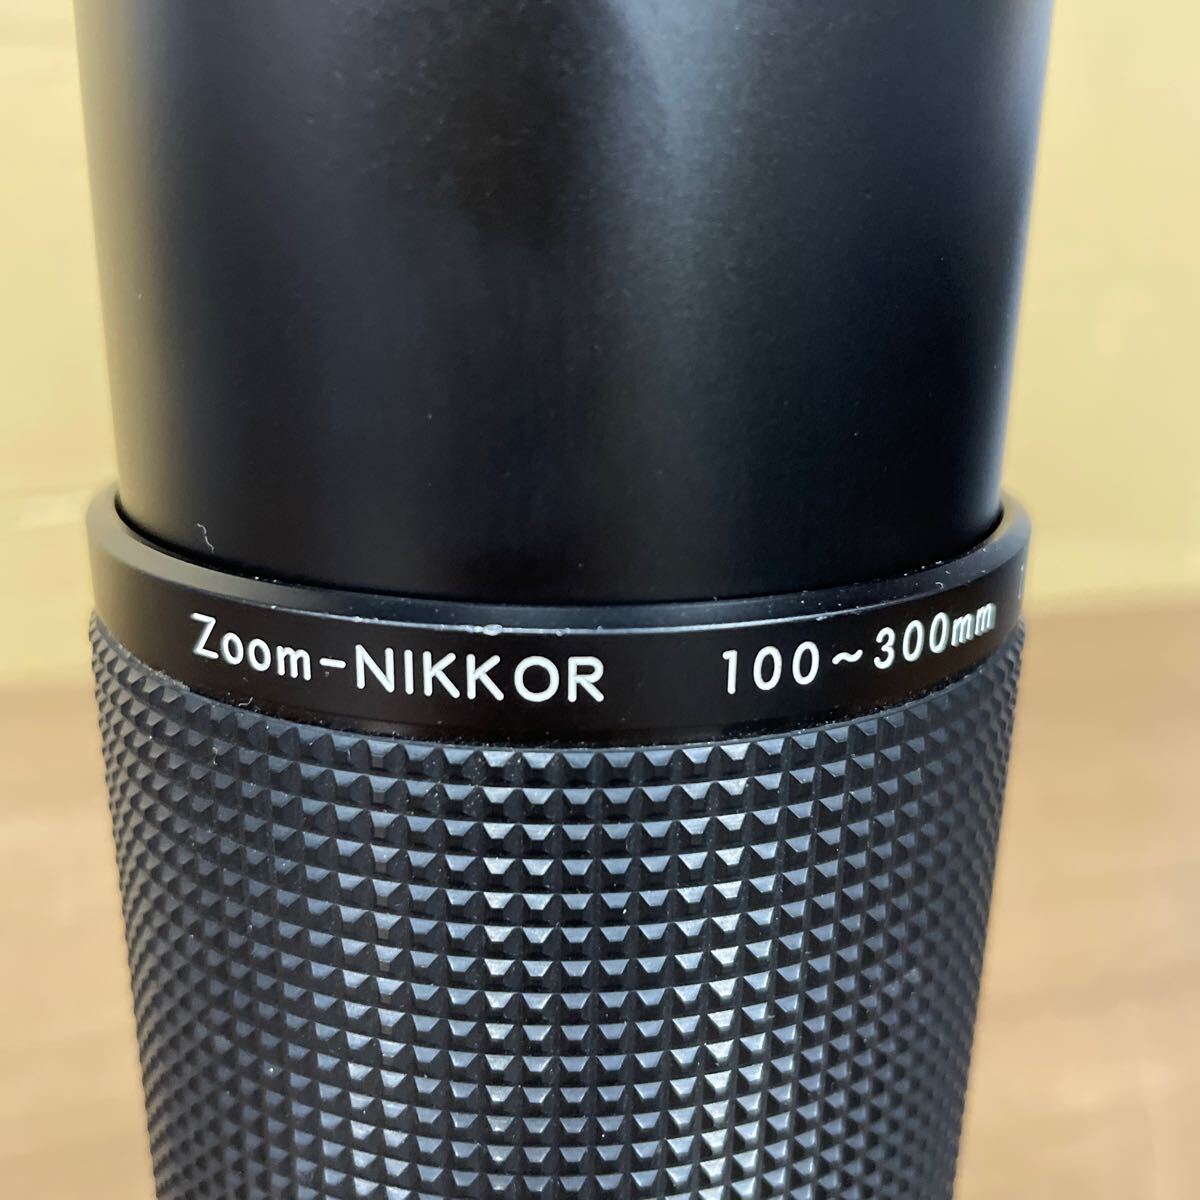 UTs273 Nikon ニコン Zoom-NIKKOR 100〜300mm 1:5.6 232101 Kenko MC SKYLIGHT 1B 62mm カメラレンズ _画像2